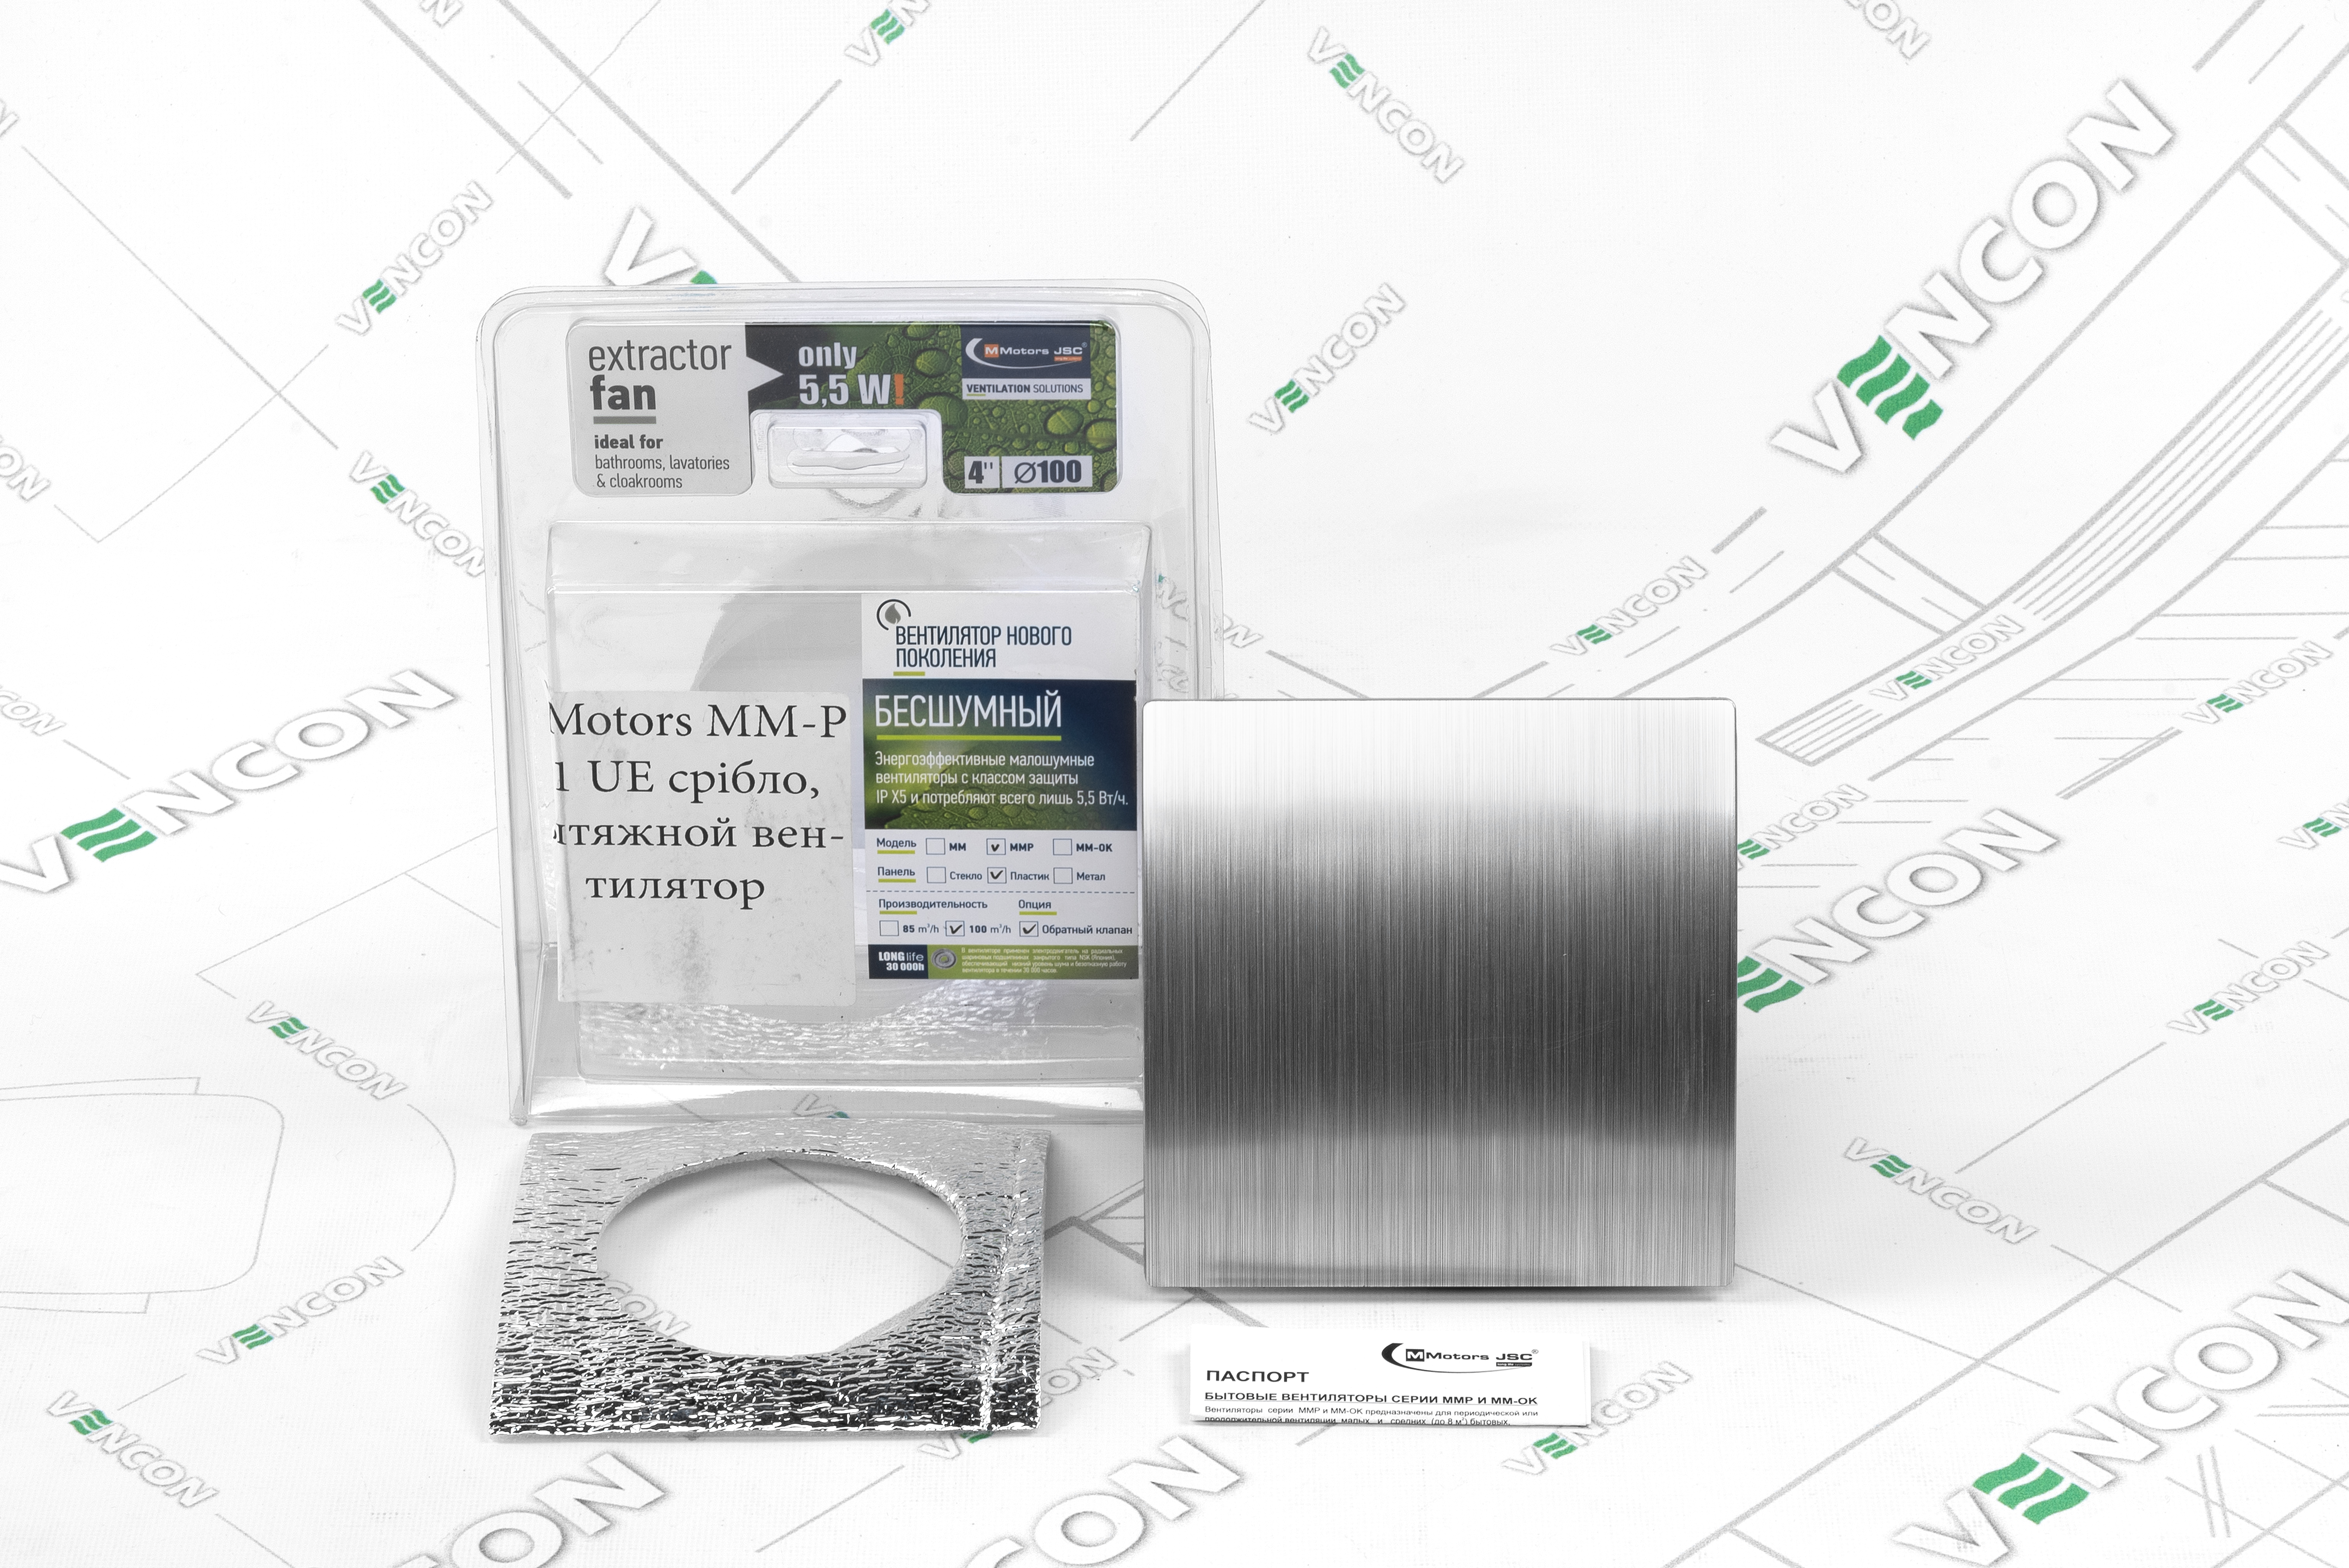 Вытяжной вентилятор MMotors ММ-Р 01 UE серебро внешний вид - фото 9